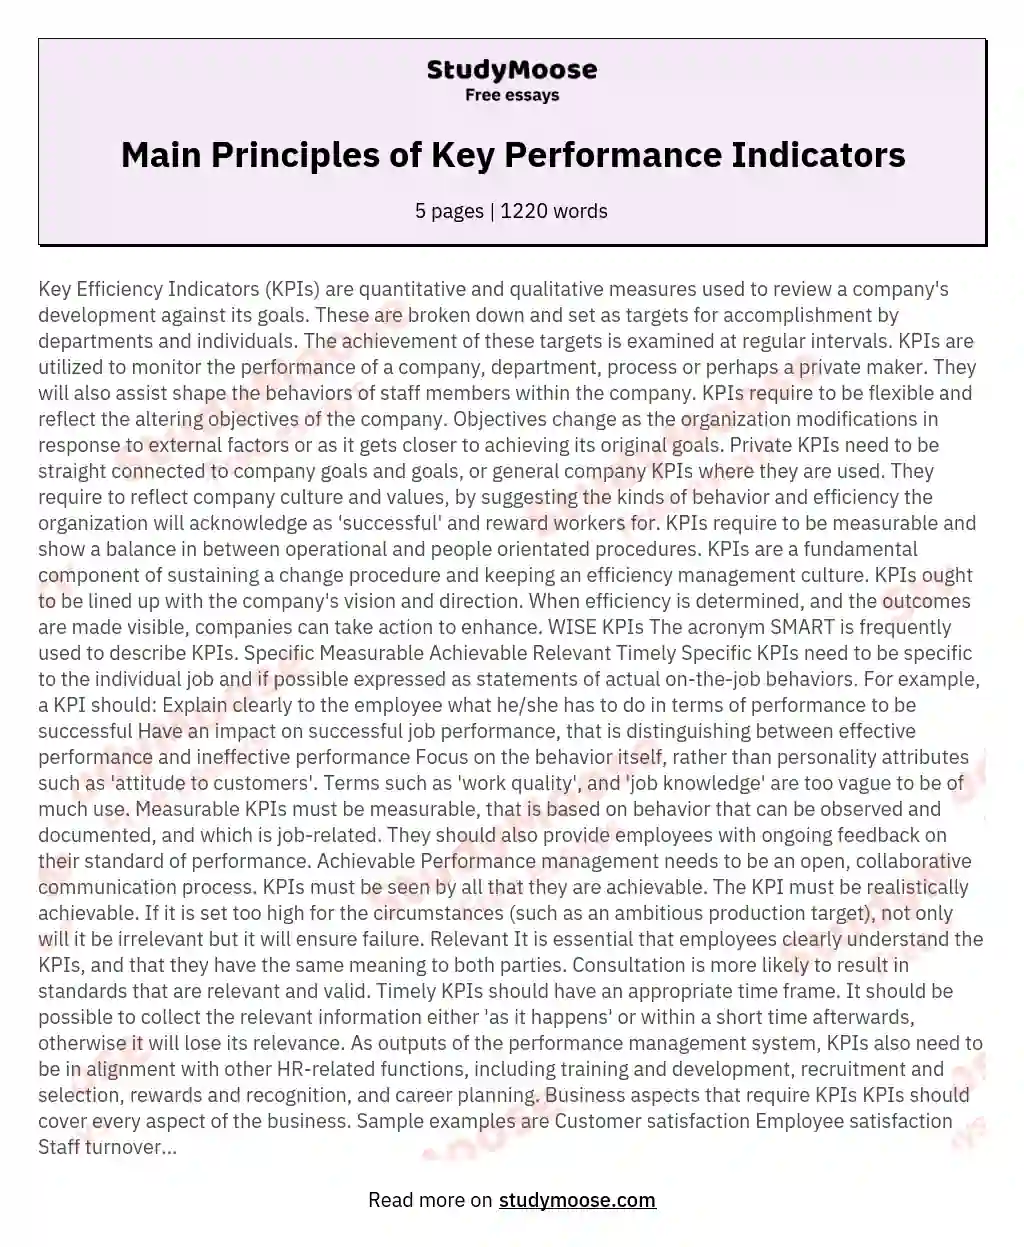 Main Principles of Key Performance Indicators essay